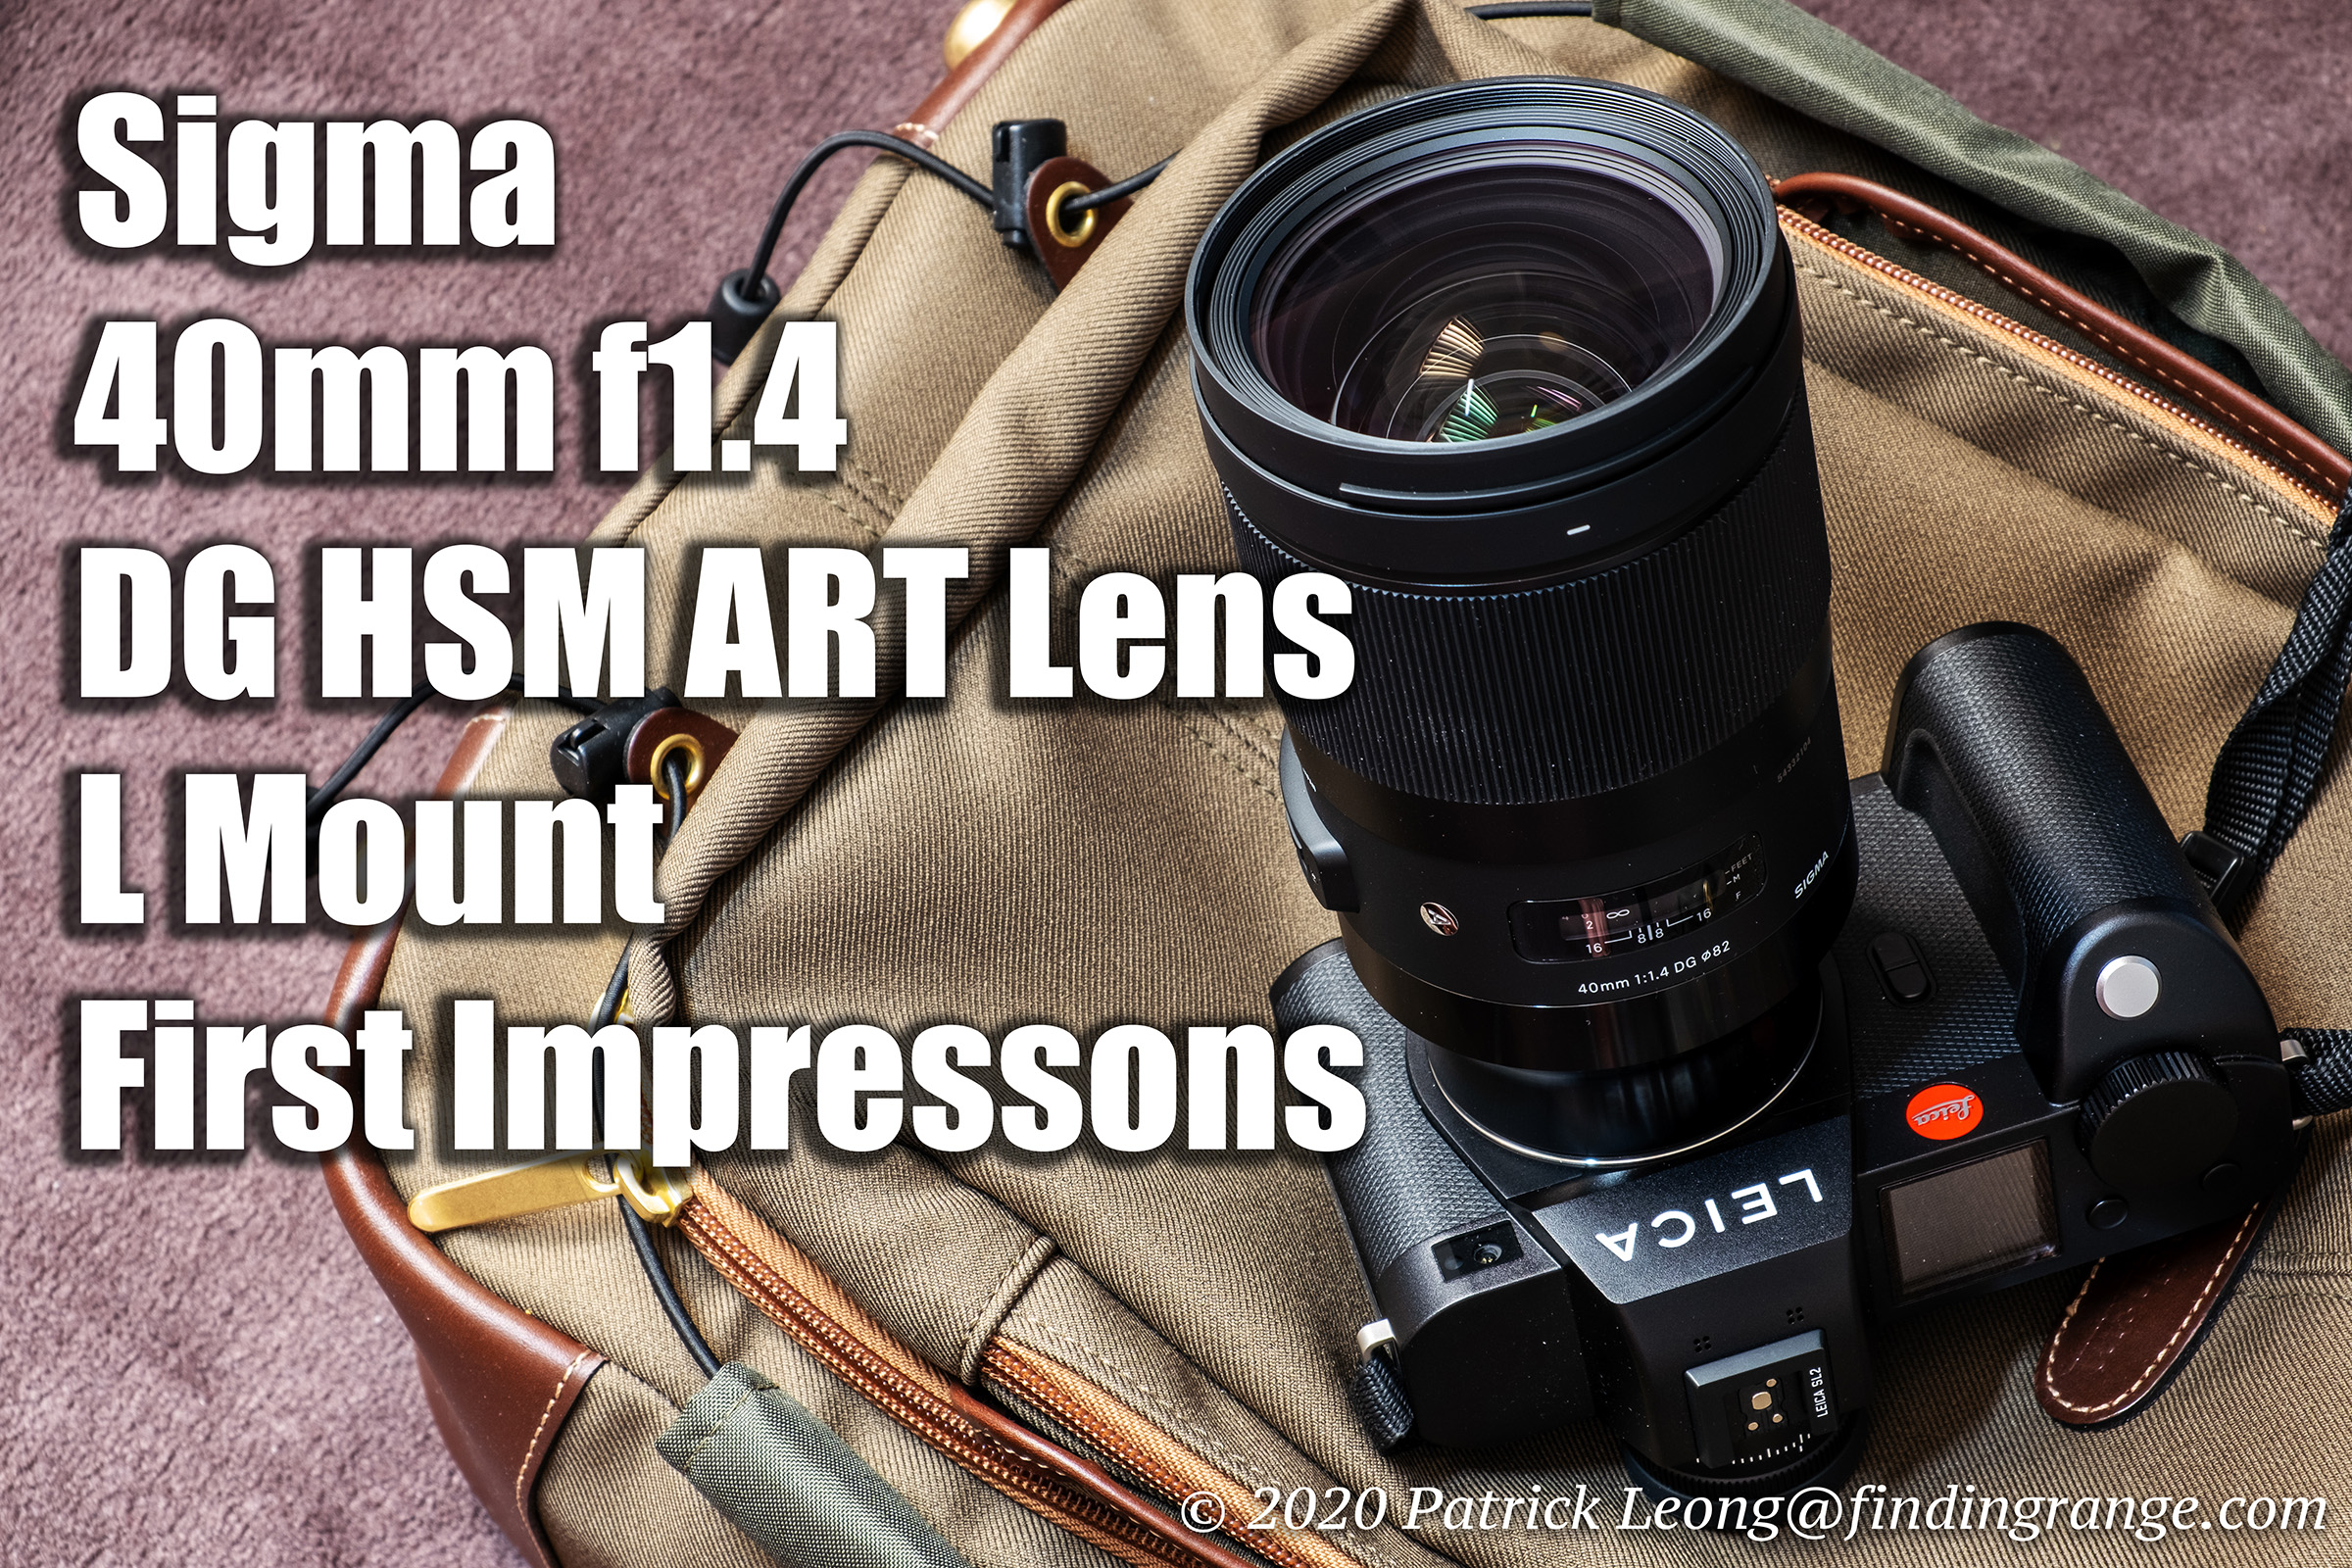 Sigma 40mm f1.4 DG HSM Art Lens L Mount First Impressions